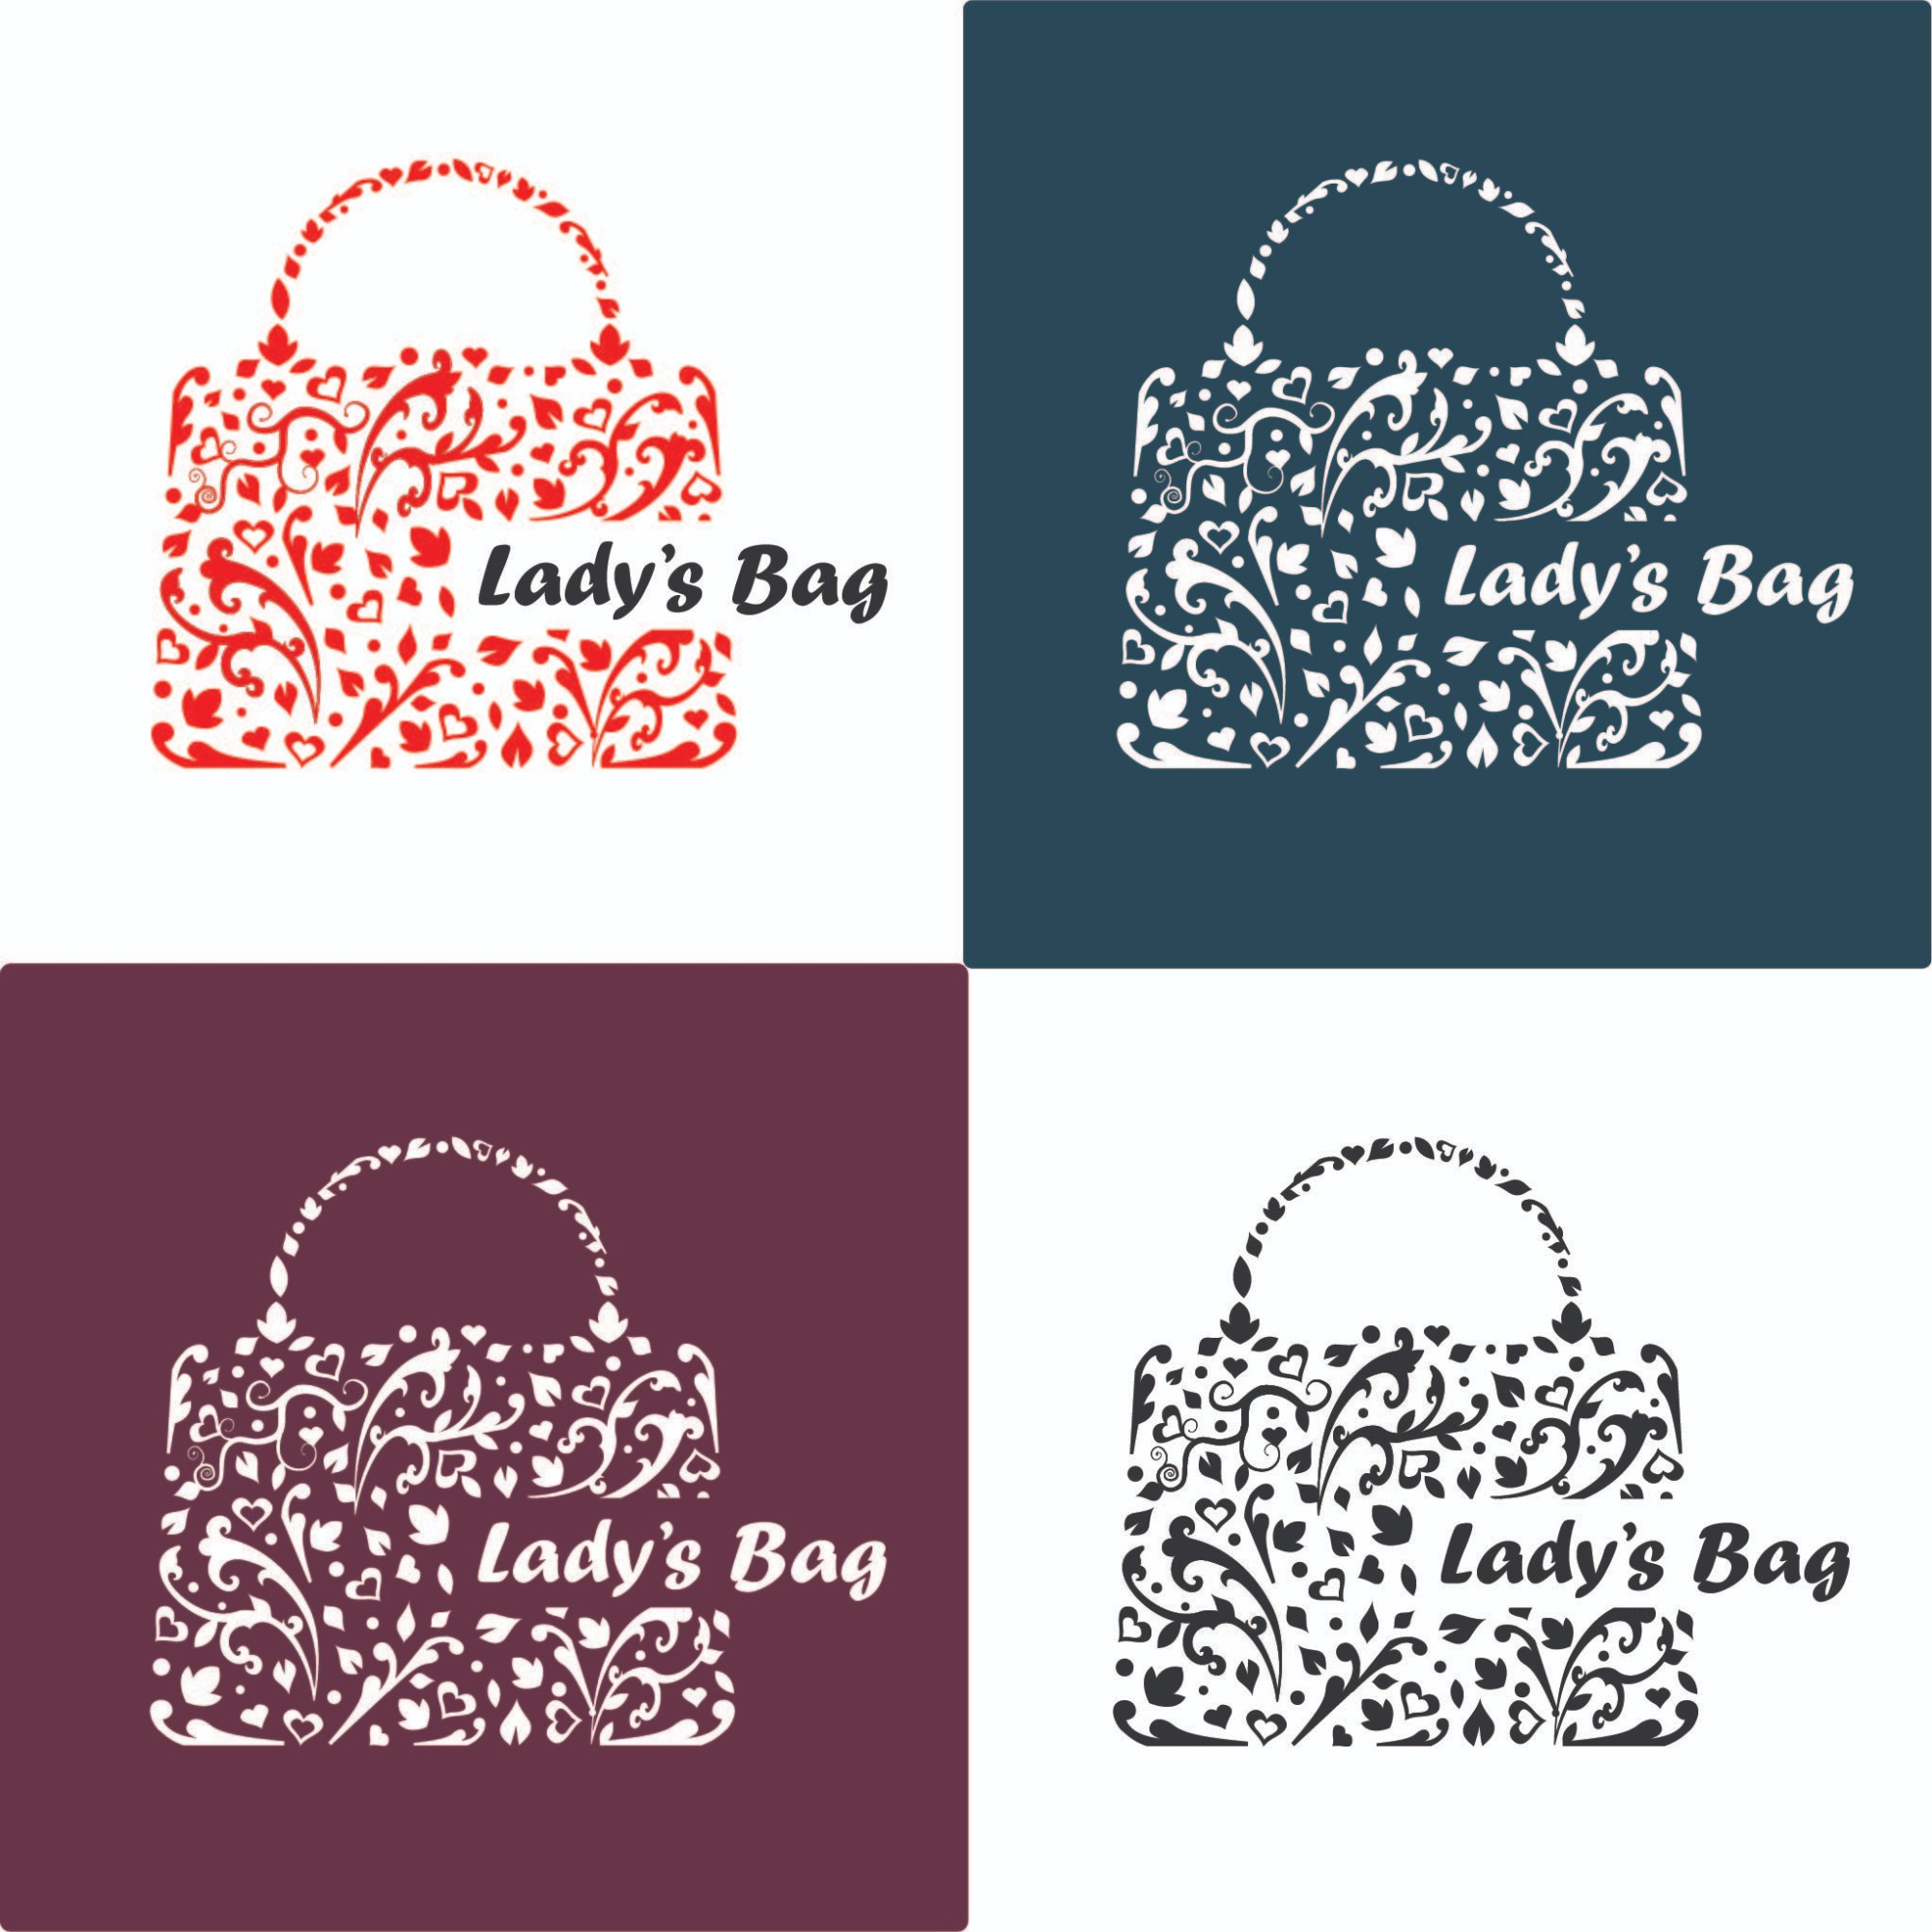 Luxury Bags Brands Logo Design